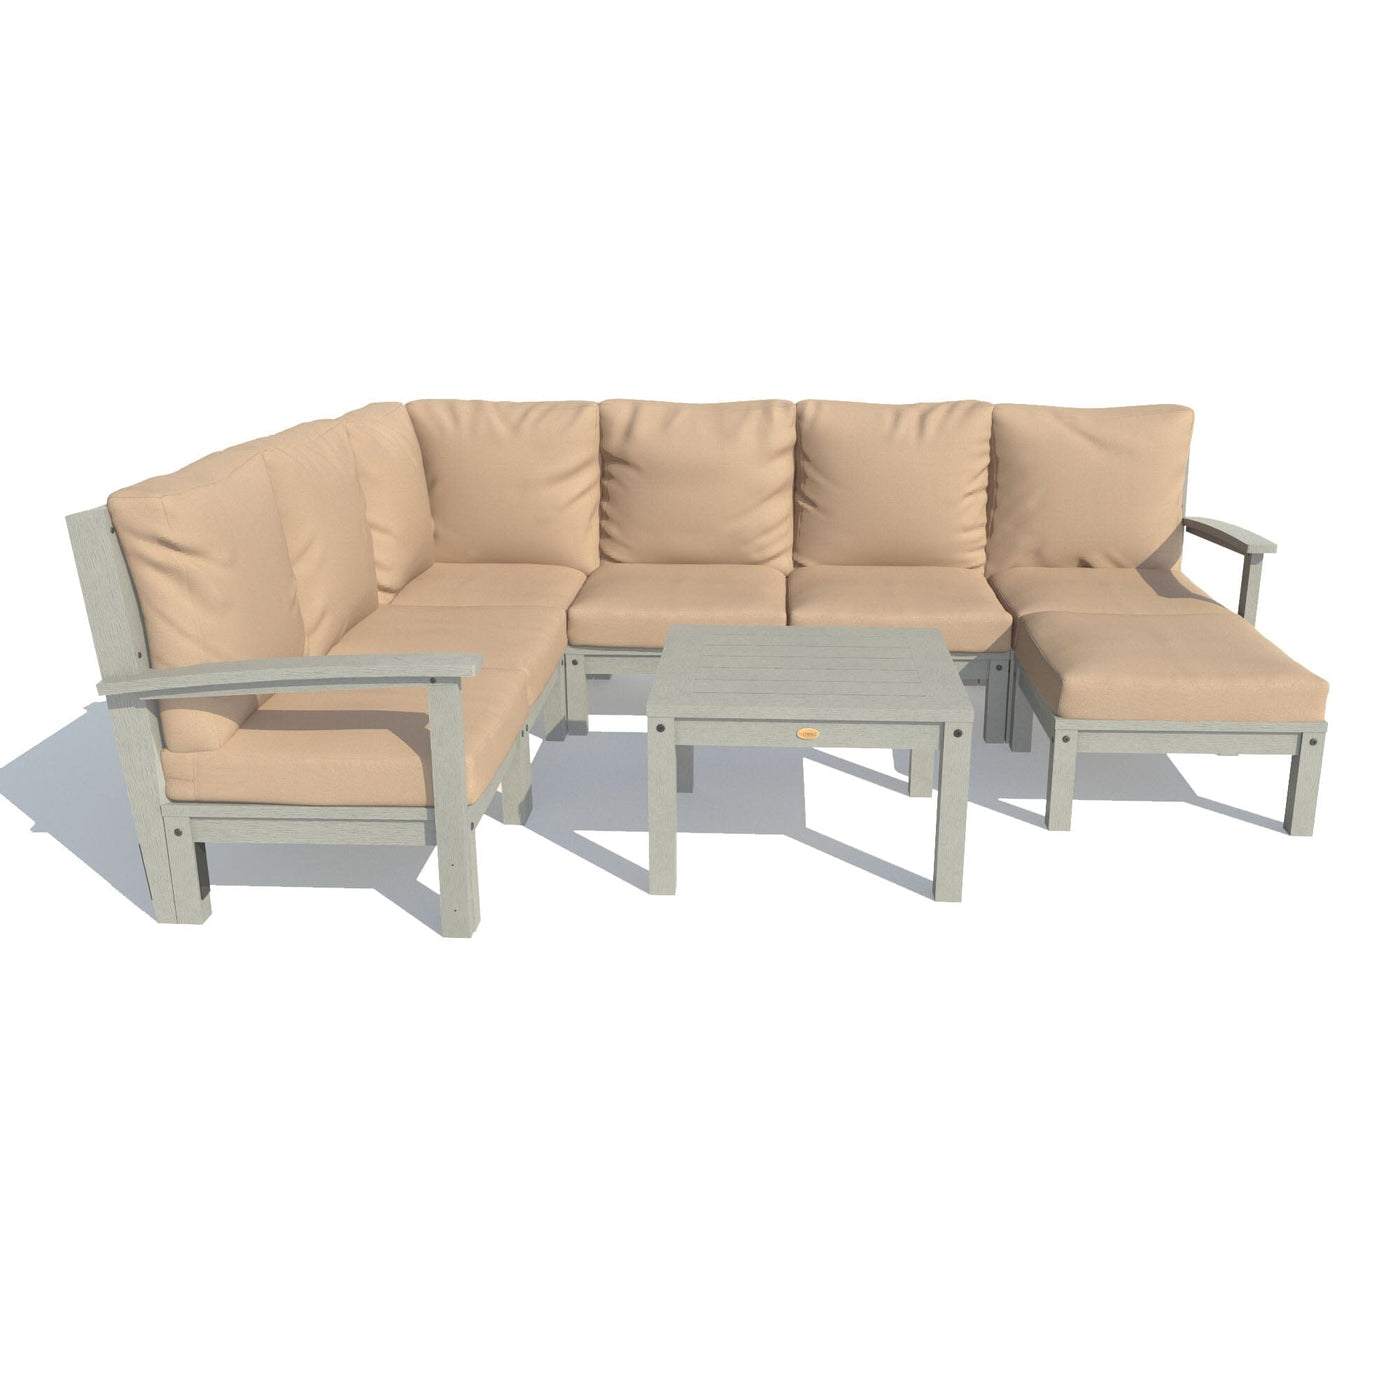 Bespoke Deep Seating: 8 Piece Sectional Sofa Set with Ottoman and Side Table Deep Seating Highwood USA Dune Coastal Teak 